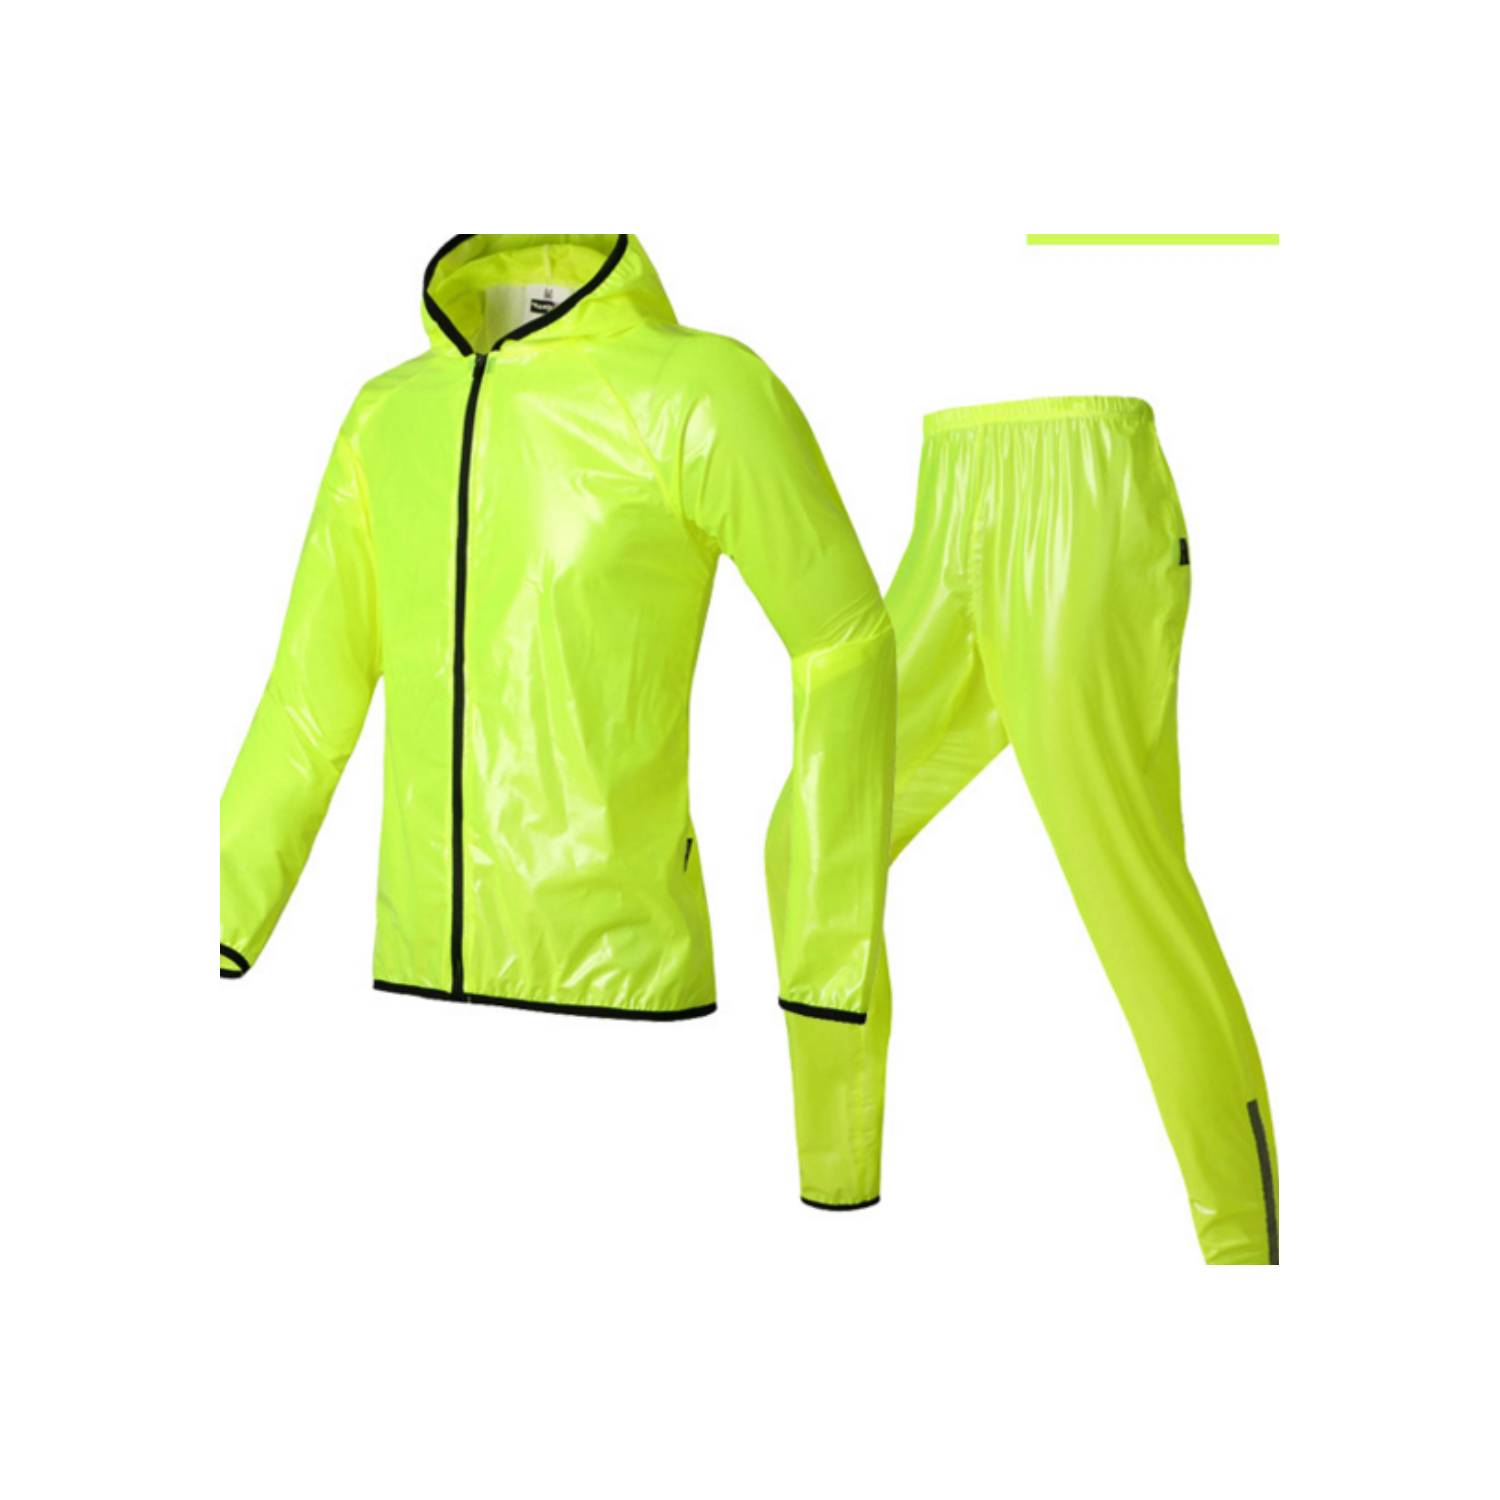 Impermeable para chaqueta y pantalón 100 impermeable ACCESSORIES | falabella.com